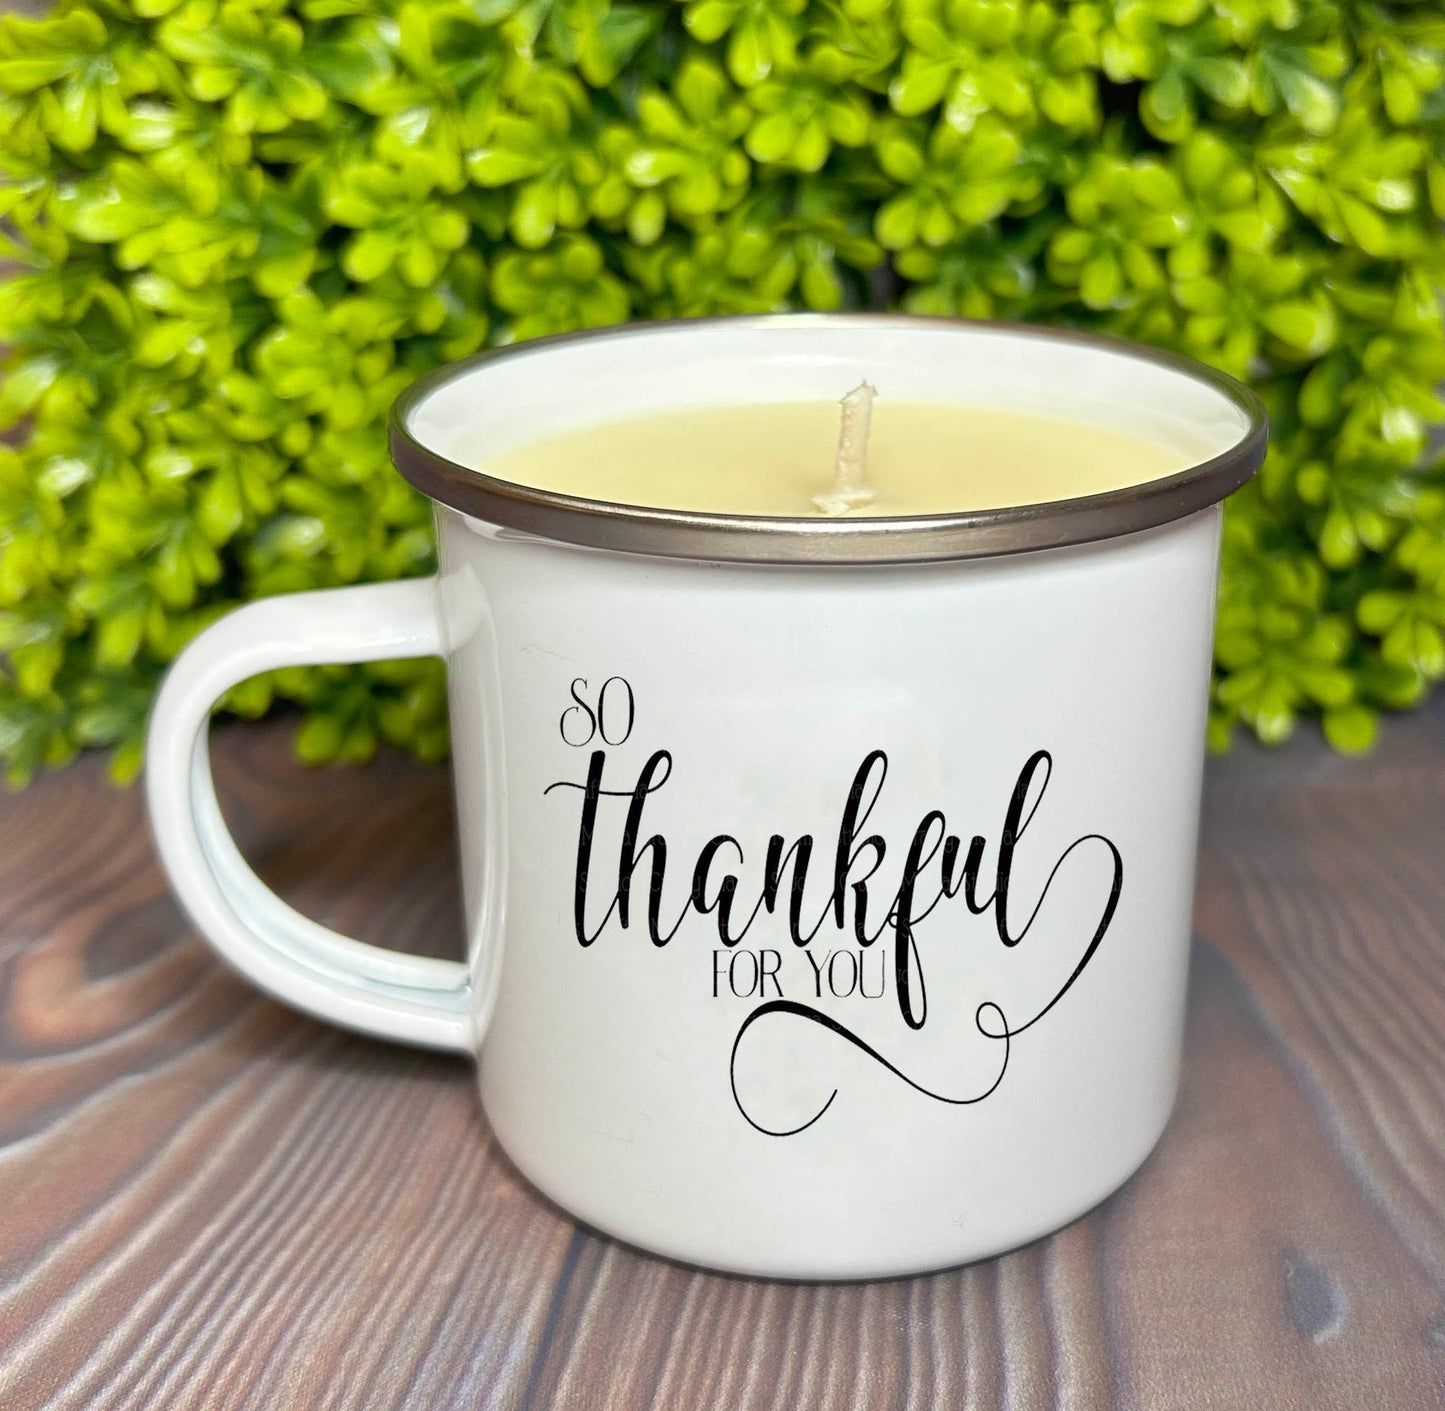 Wholesale Enamel Mug Candle -  So Thankful for You - QTY 3 CANDLES